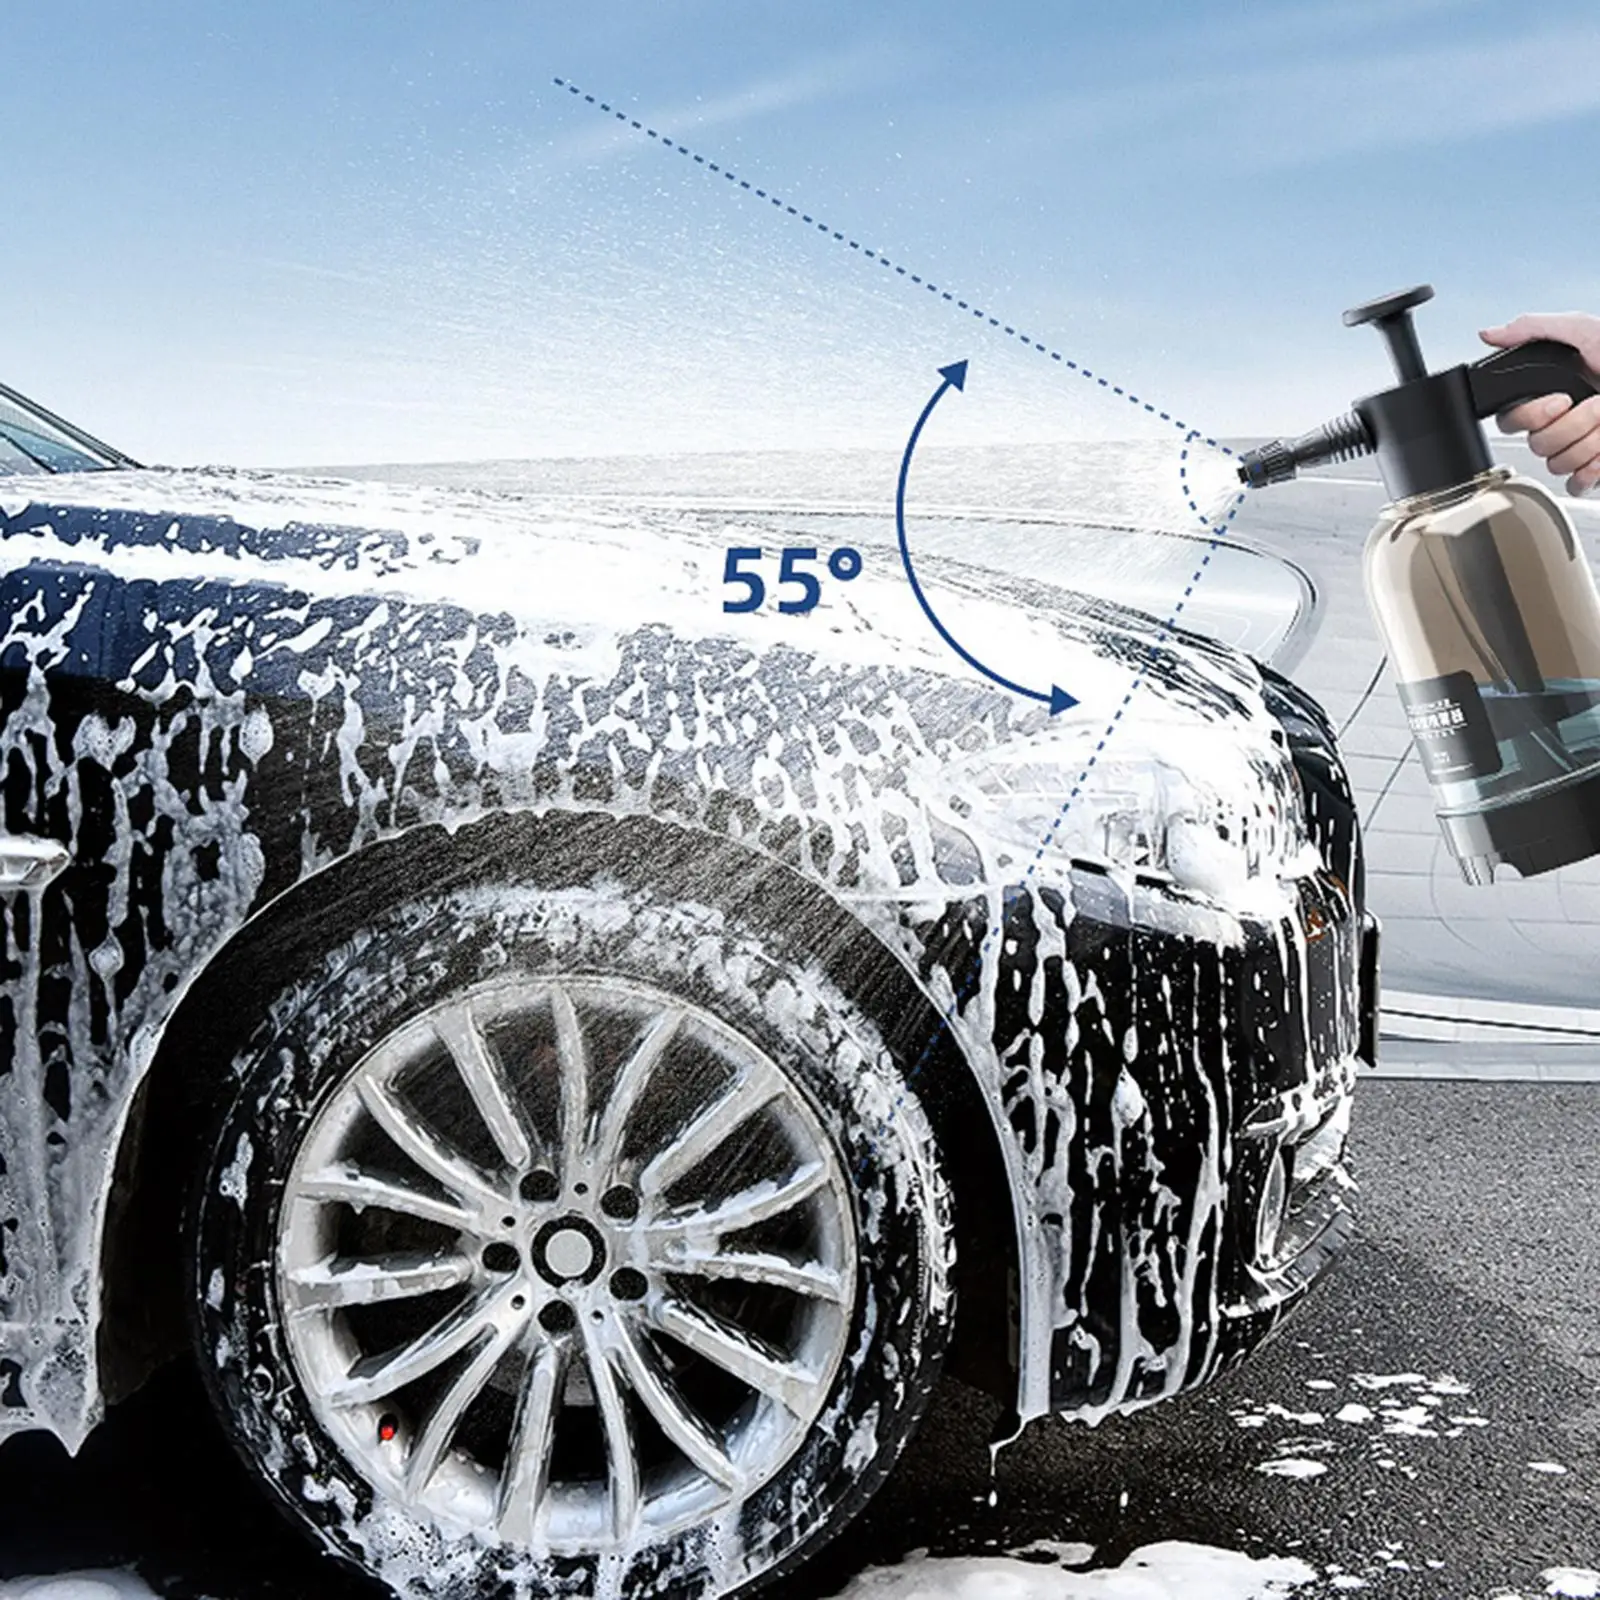 2L Car Wash Pump Manual Foaming Pressure Sprayer for Home Auto Use